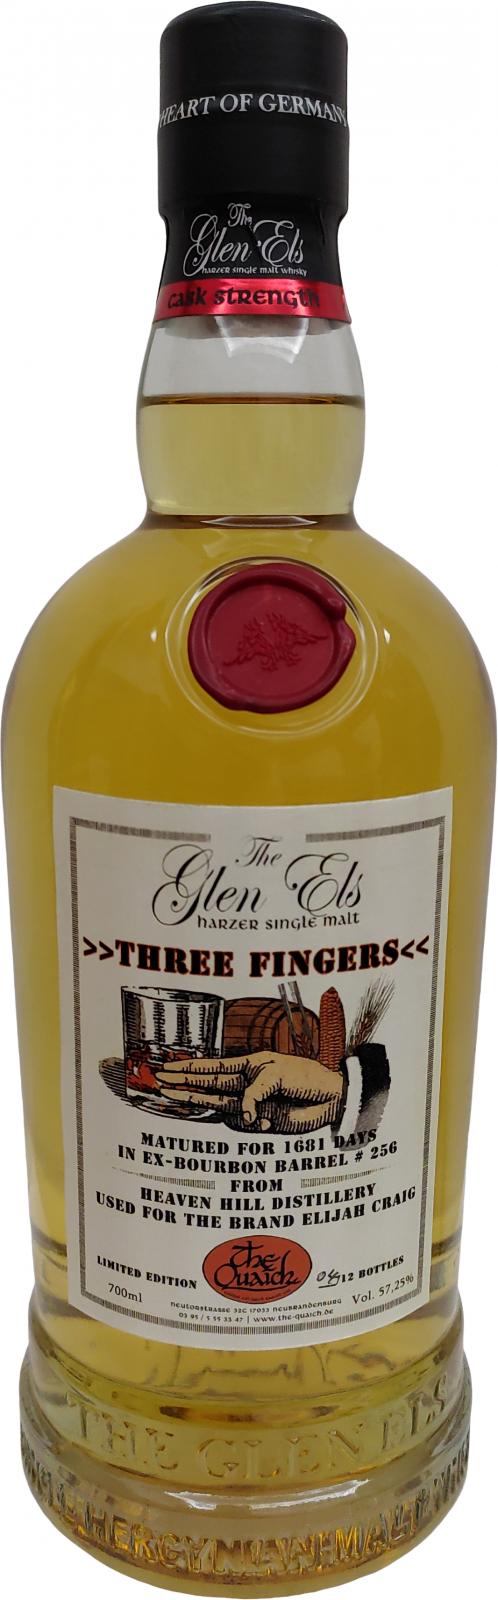 Glen Els Three Fingers Limited Edition #256 The Quaich 57.25% 700ml